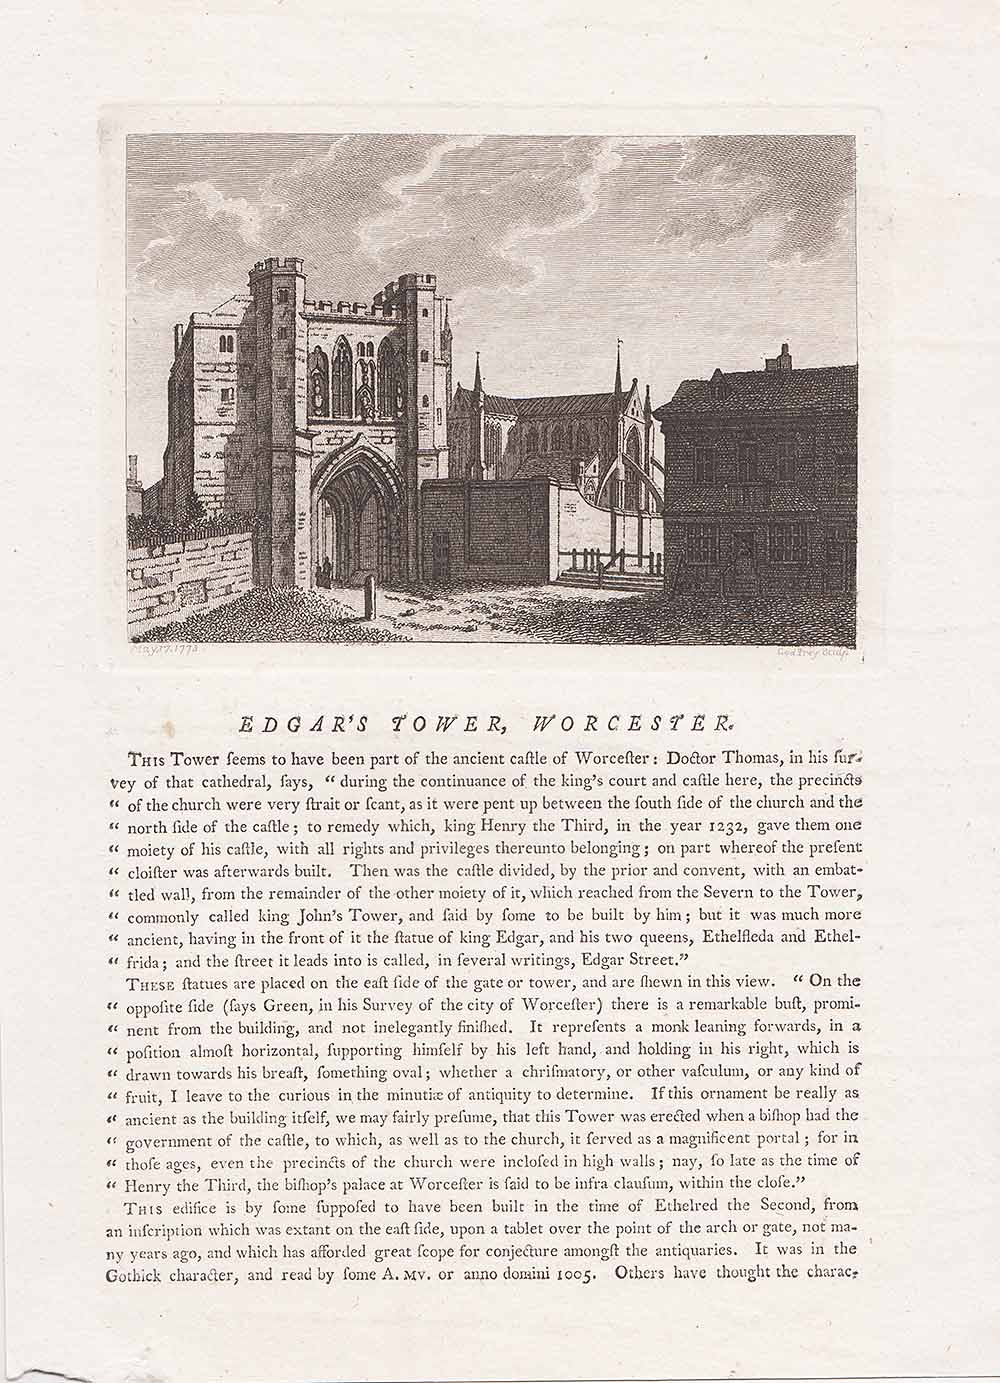 Edgar's Tower Worcester